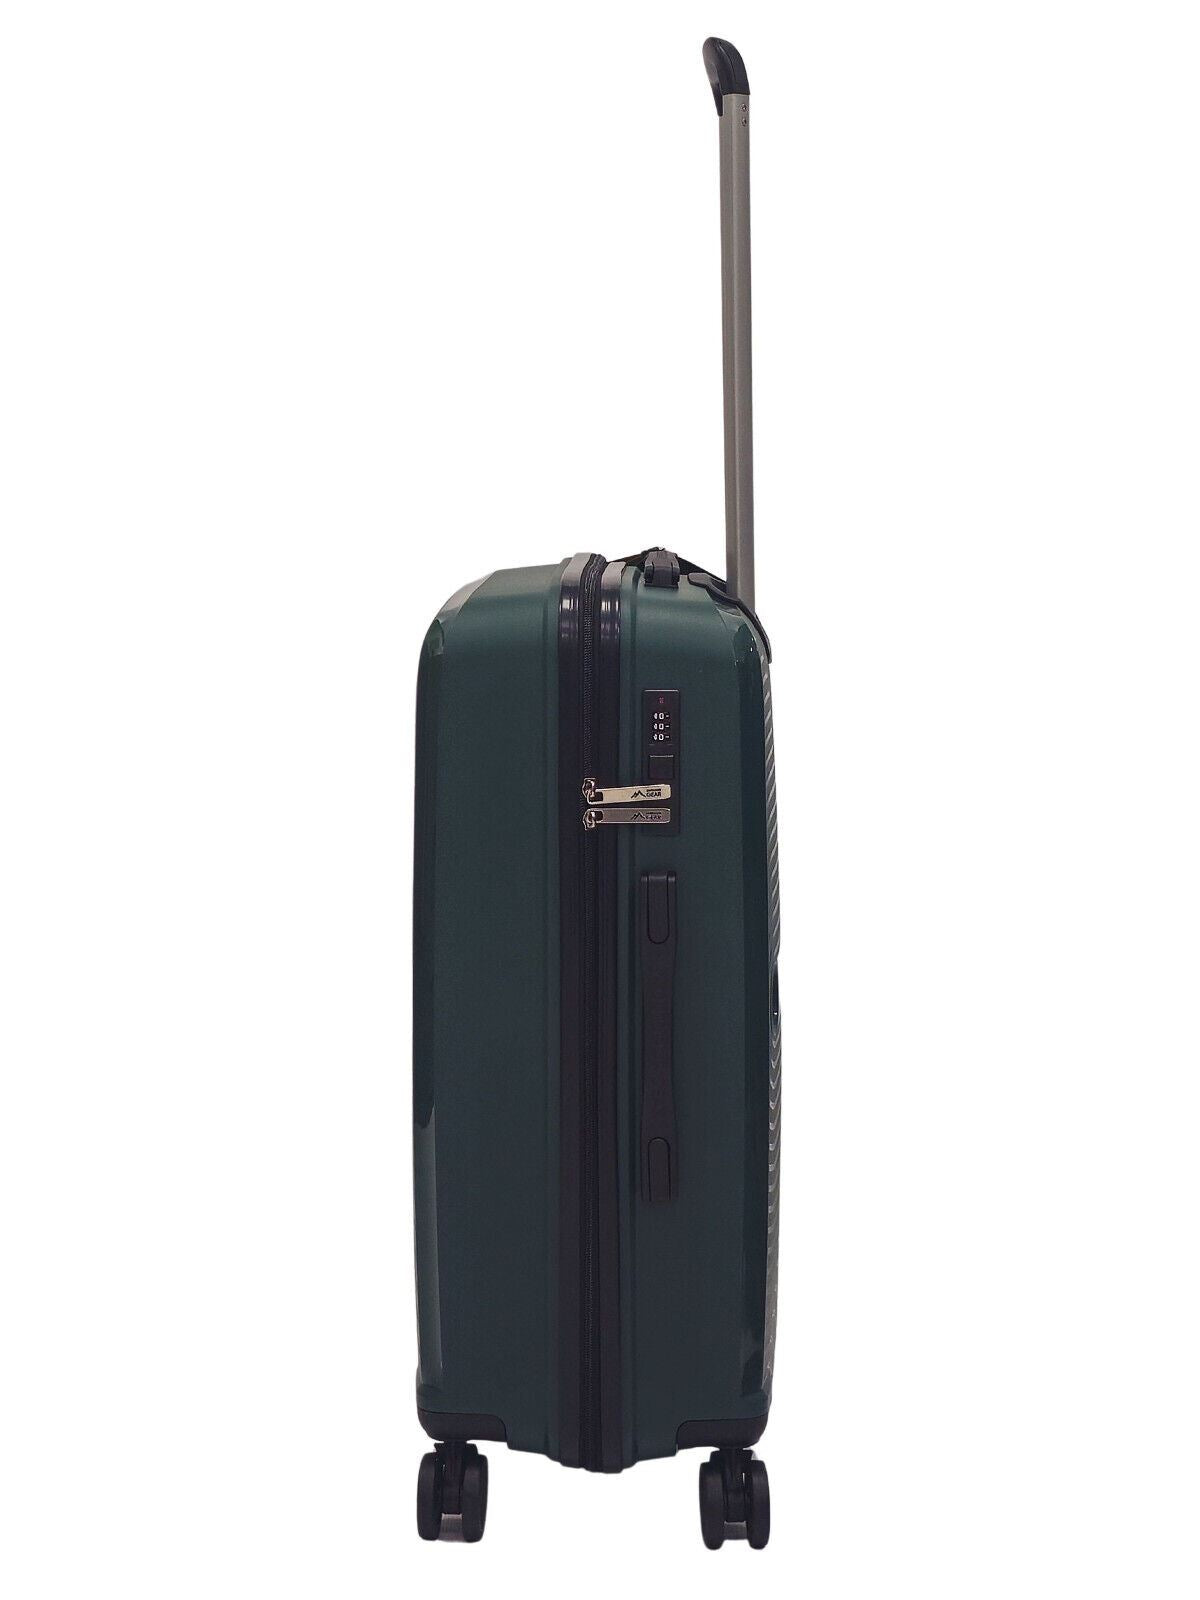 Abbeville Medium Hard Shell Suitcase in Green